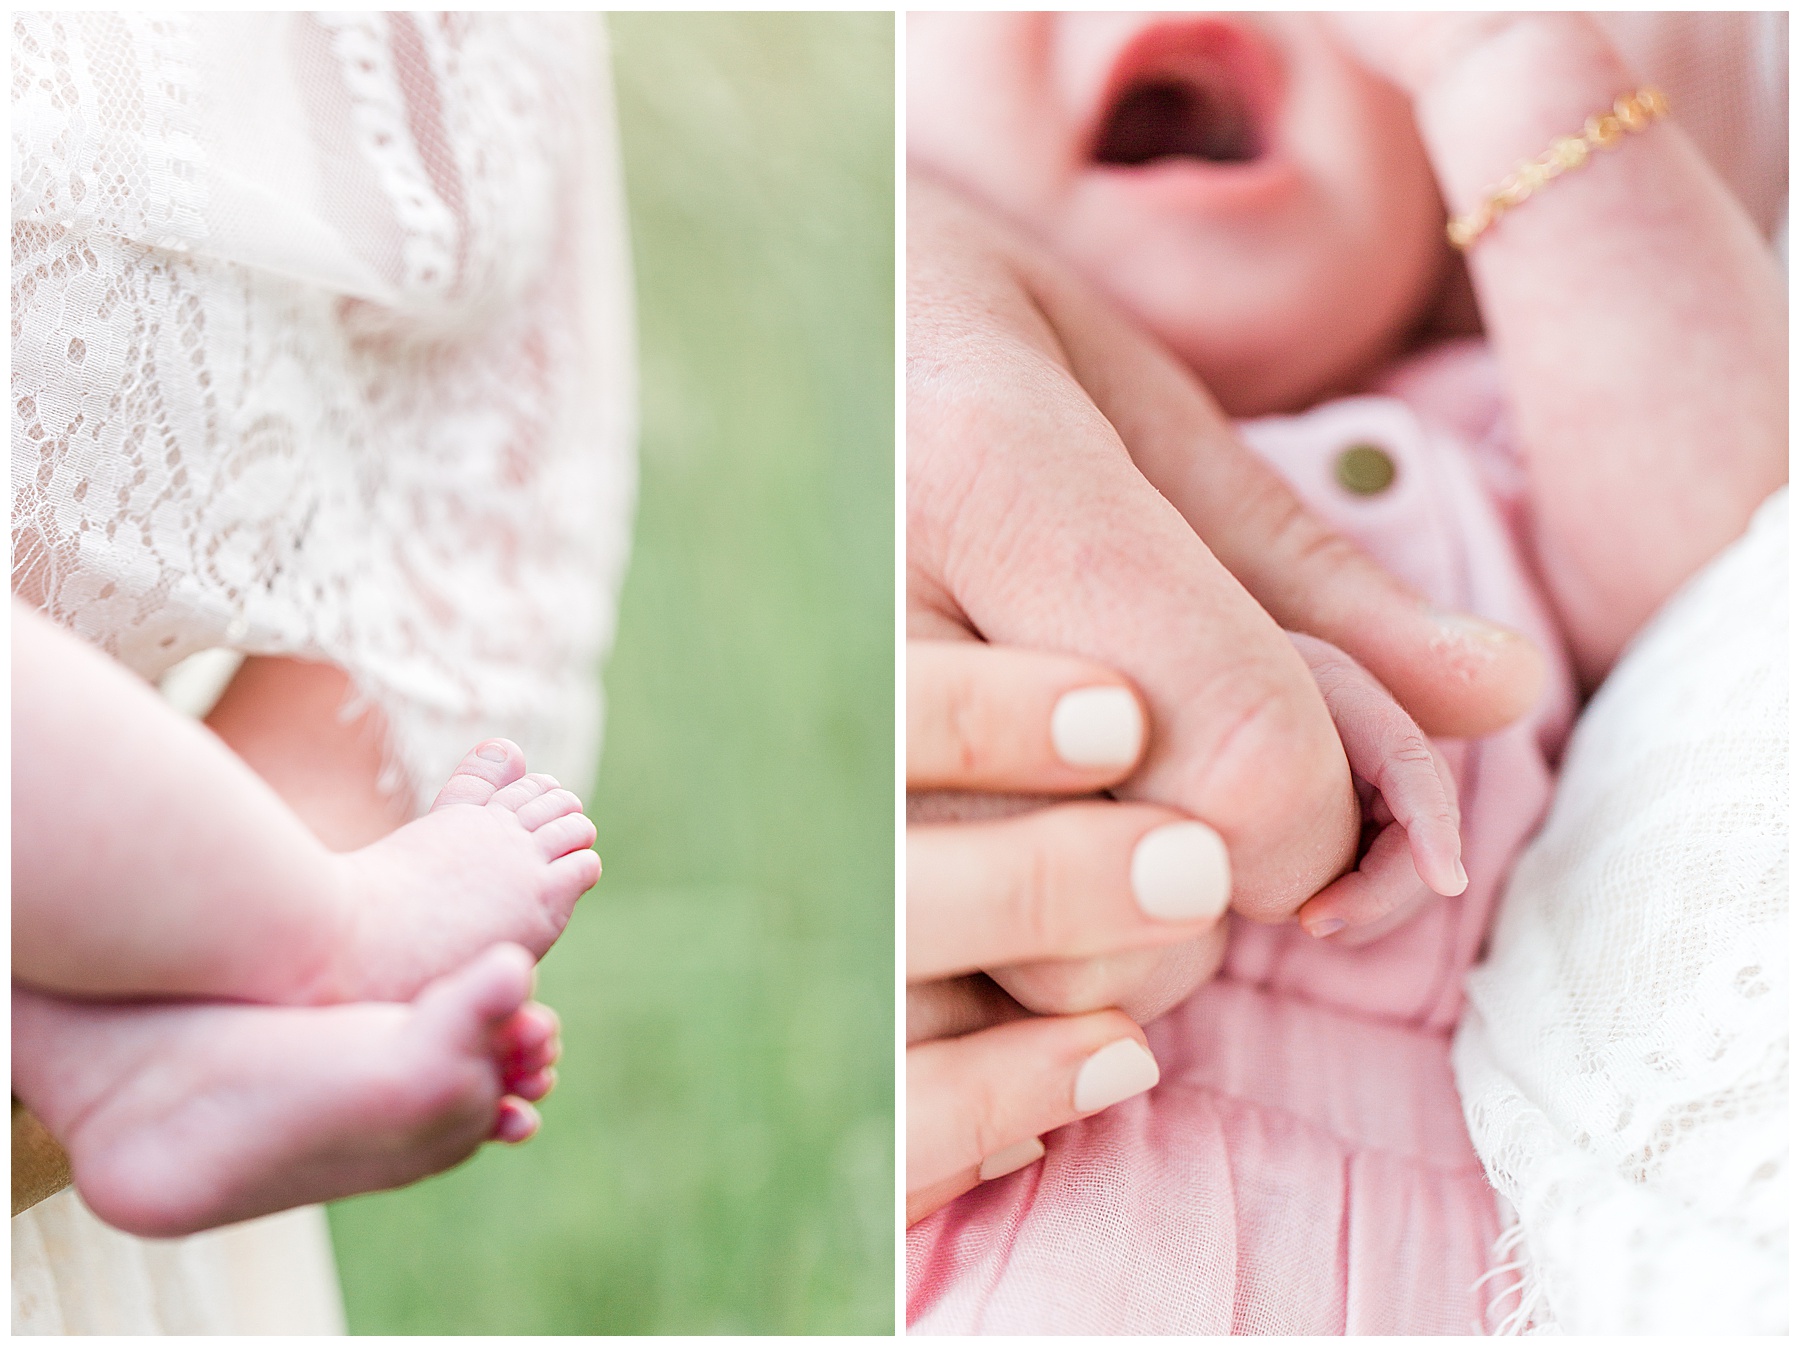 Newborn-baby-feet-and-hands